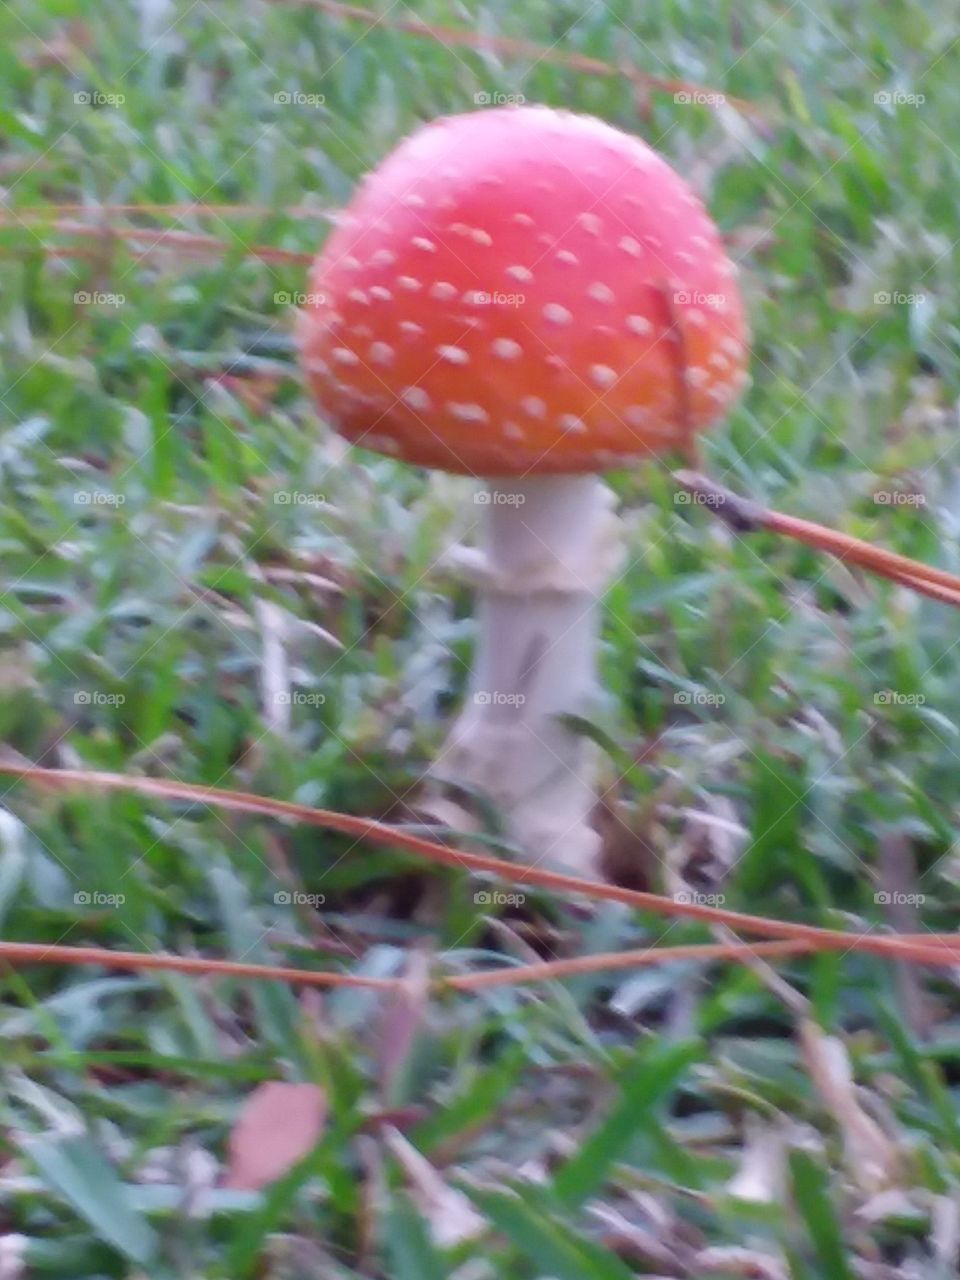 pretty little mushroom all alone